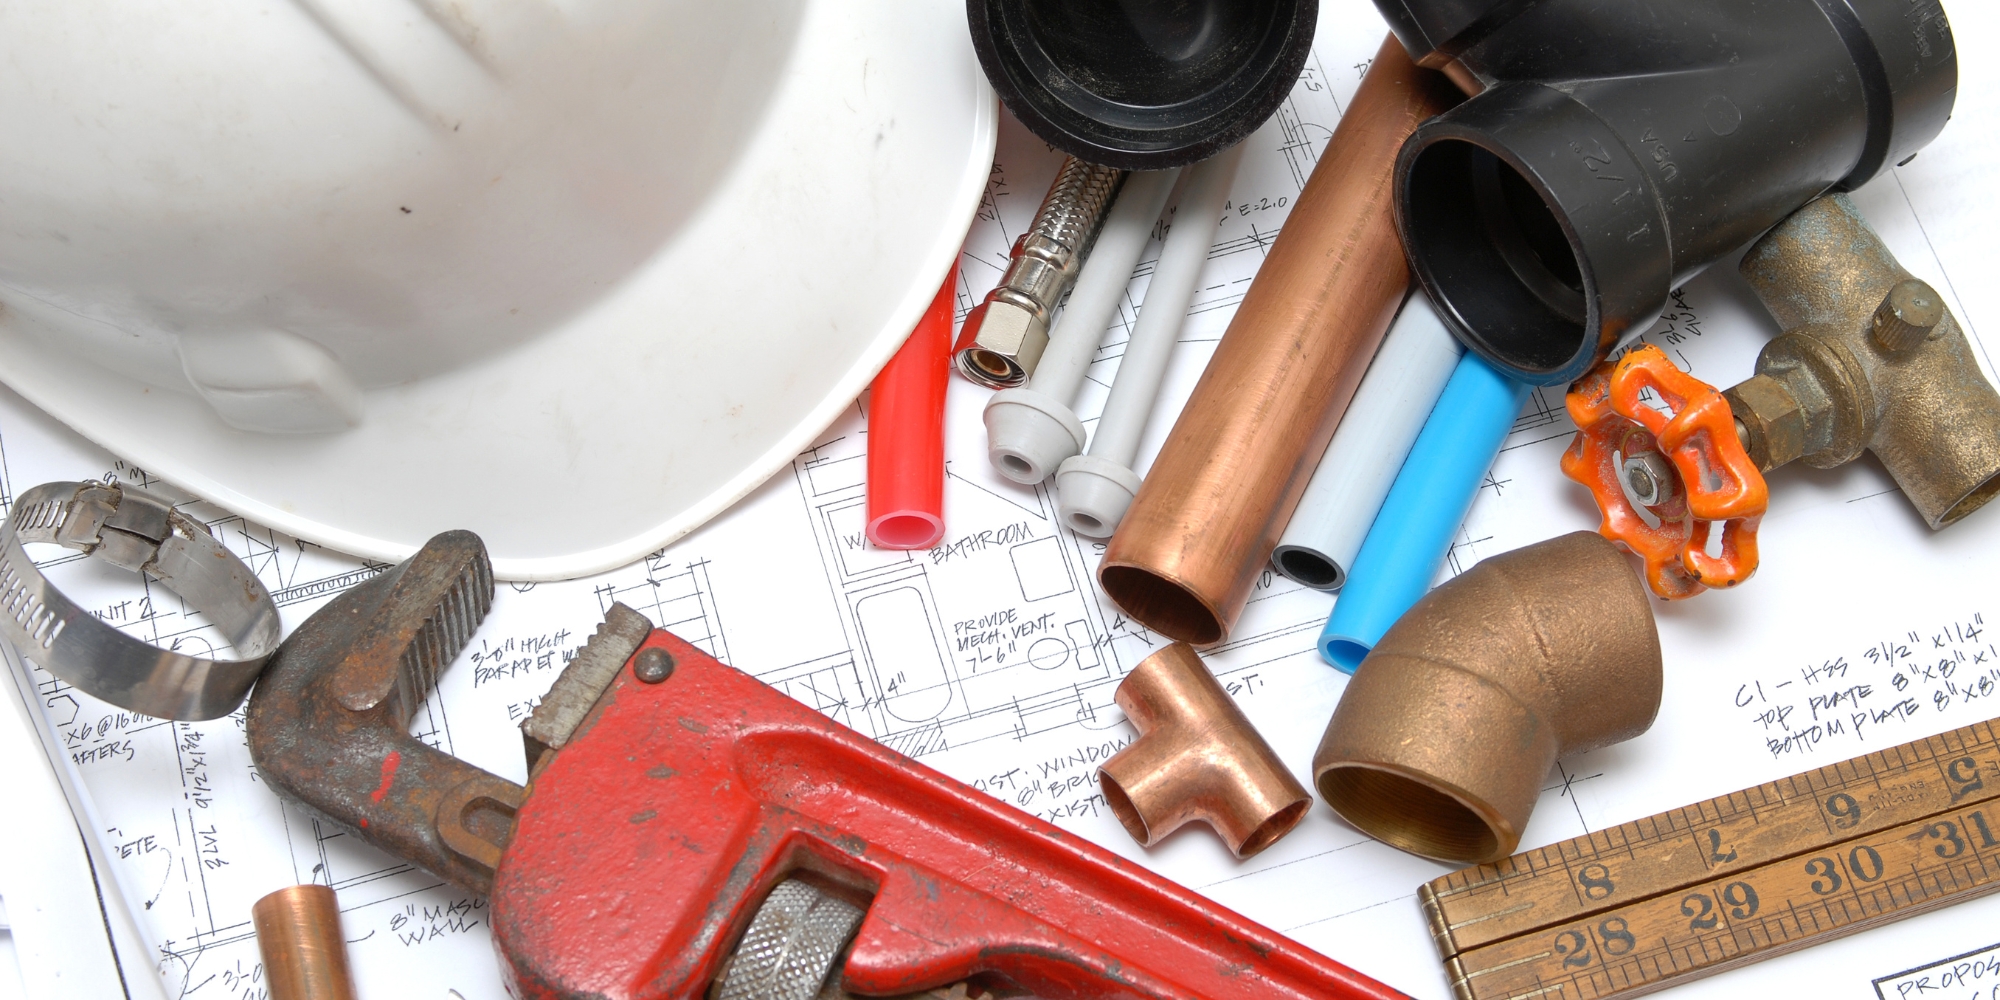 plumbing tools on top of house blueprints